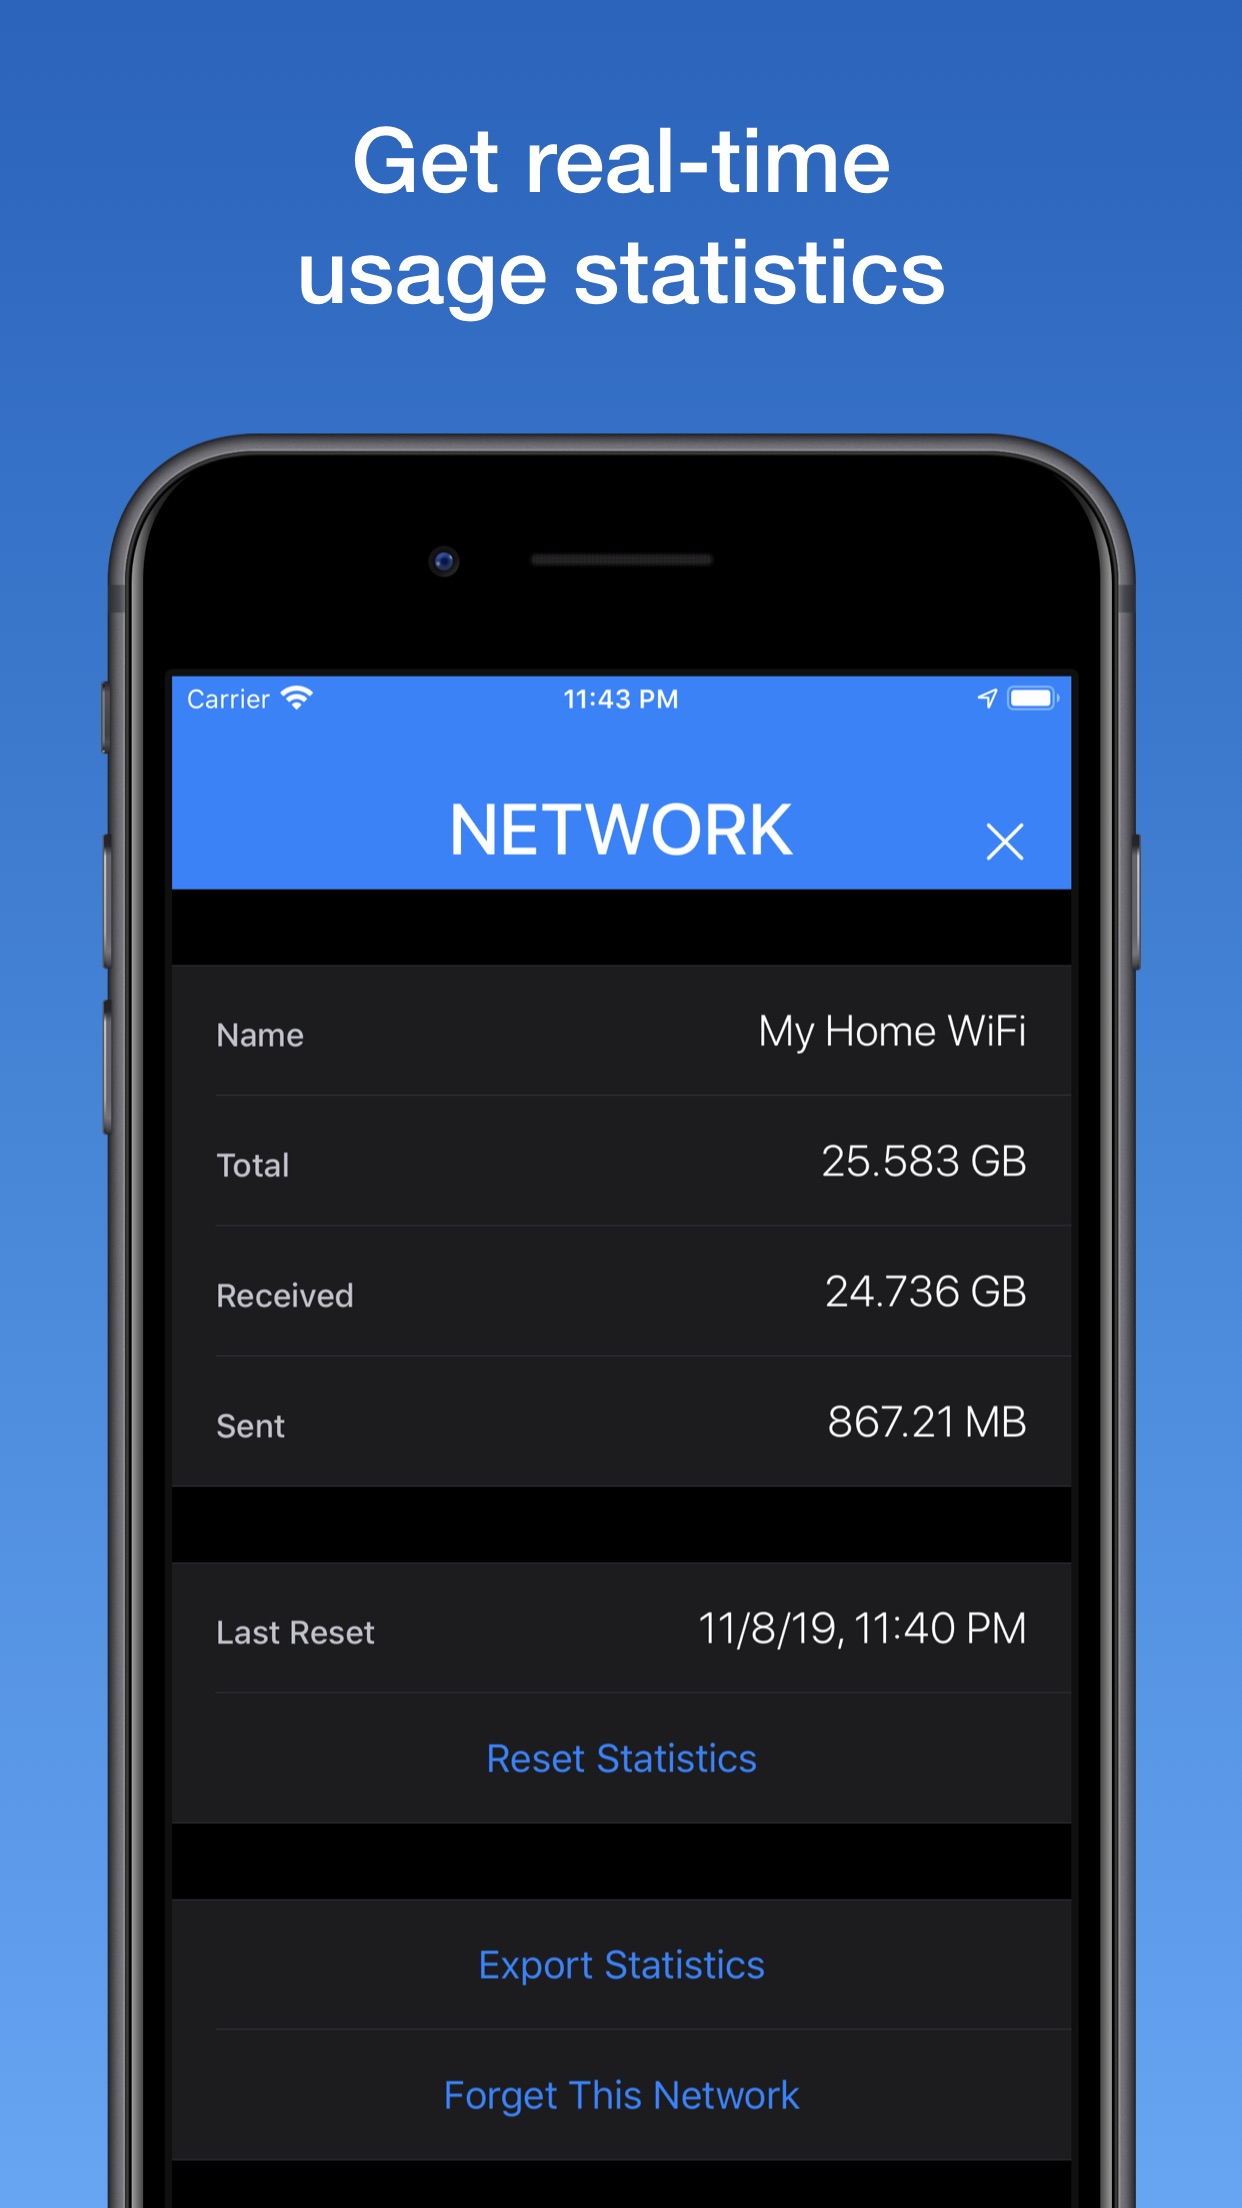 Screenshot do app WifiMan from DataMan